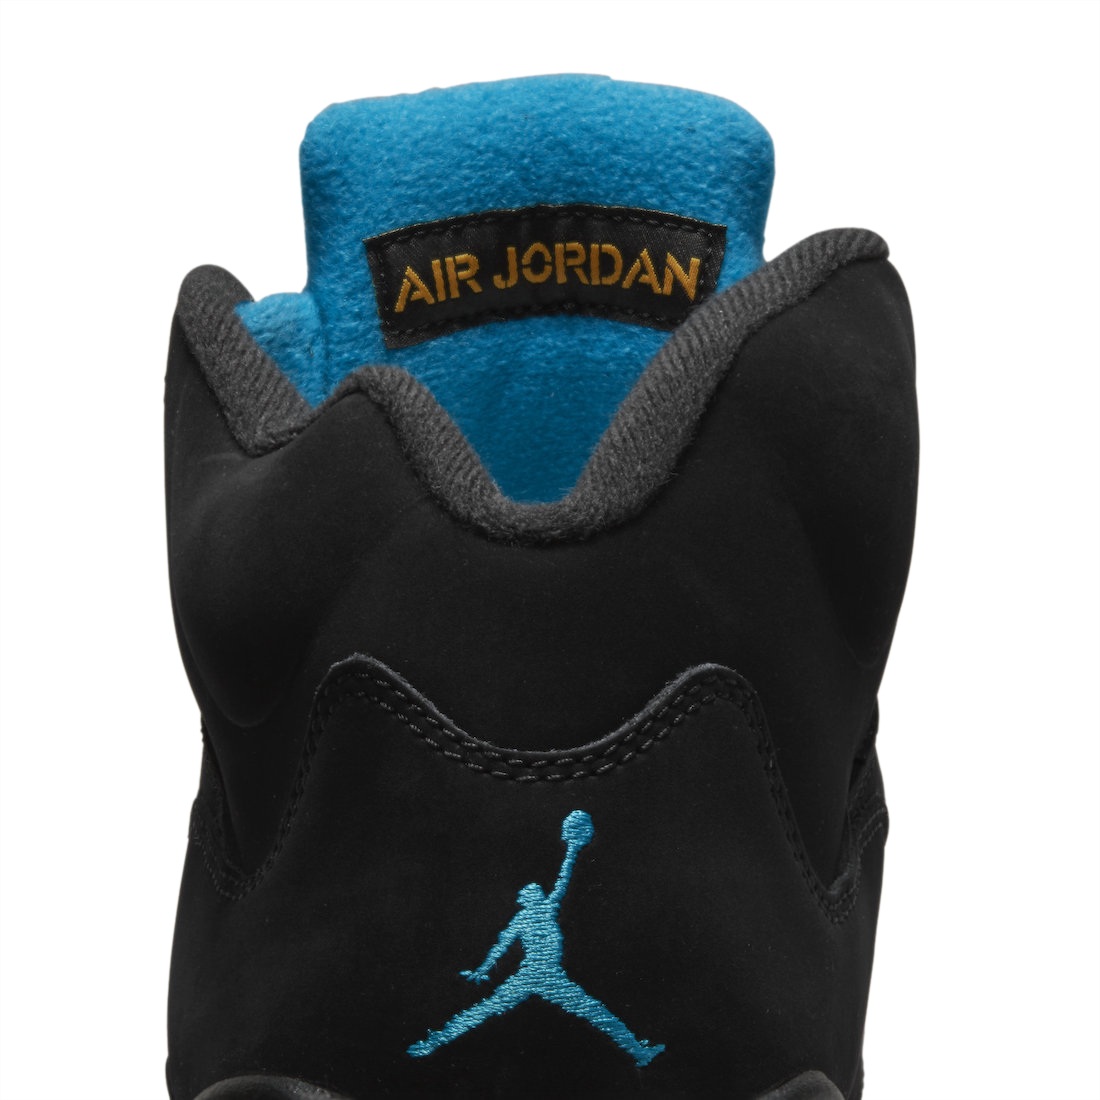 Nike Air Jordan 1 Retro 'Colette', Size 9.5, Scarce Air, 2021